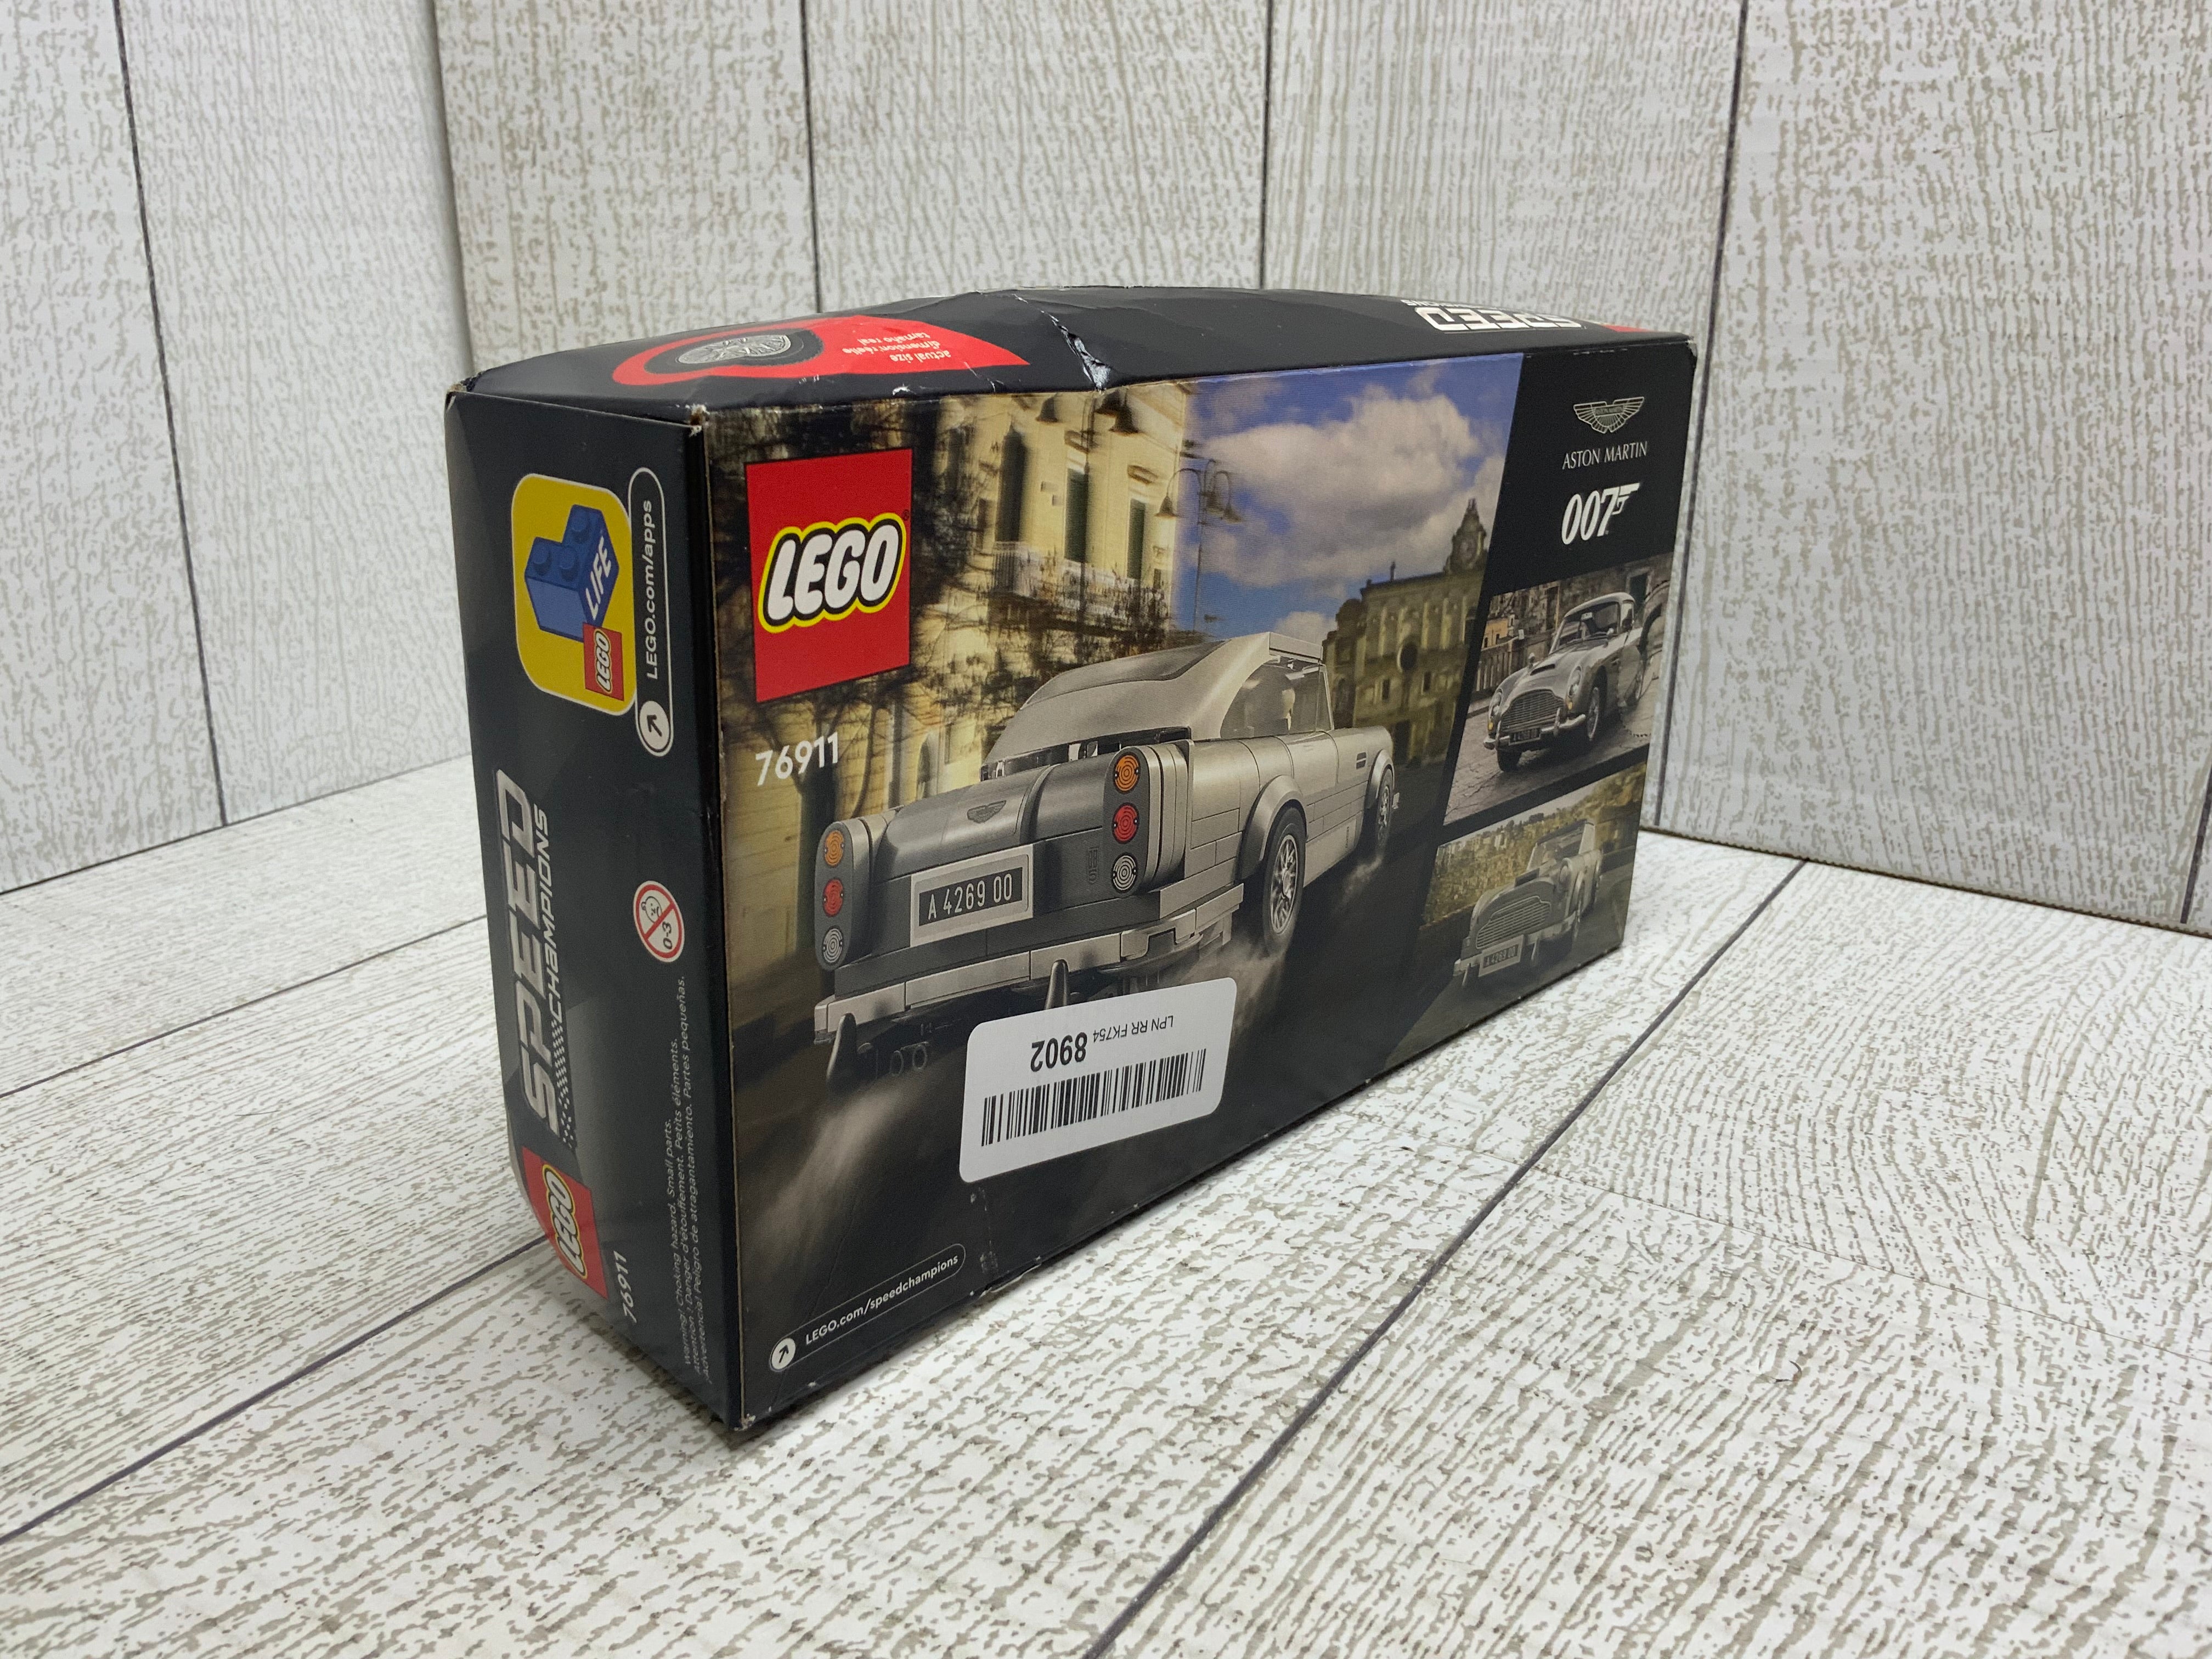 LEGO Speed Champions 007 Aston Martin DB5 76911 Building Toy Set (8037712265454)